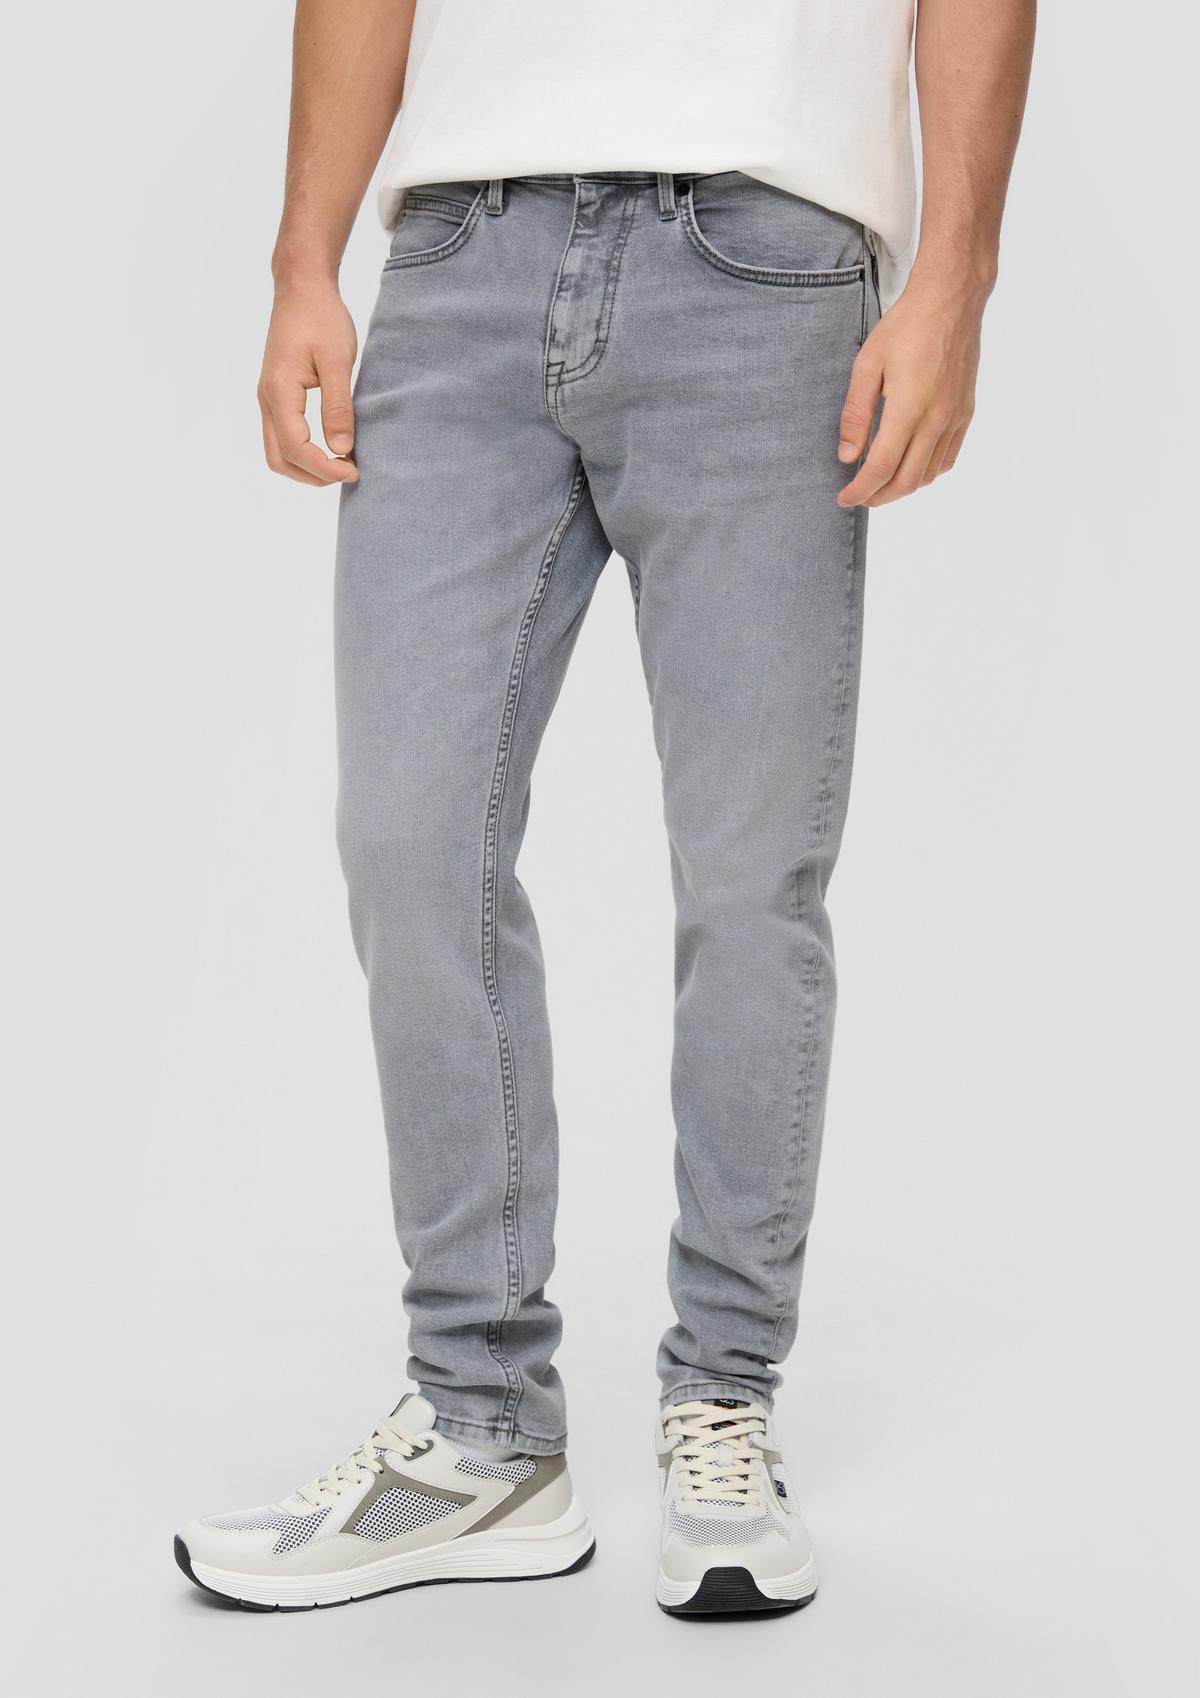 s.Oliver Shawn jeans / regular fit / mid rise / slim leg